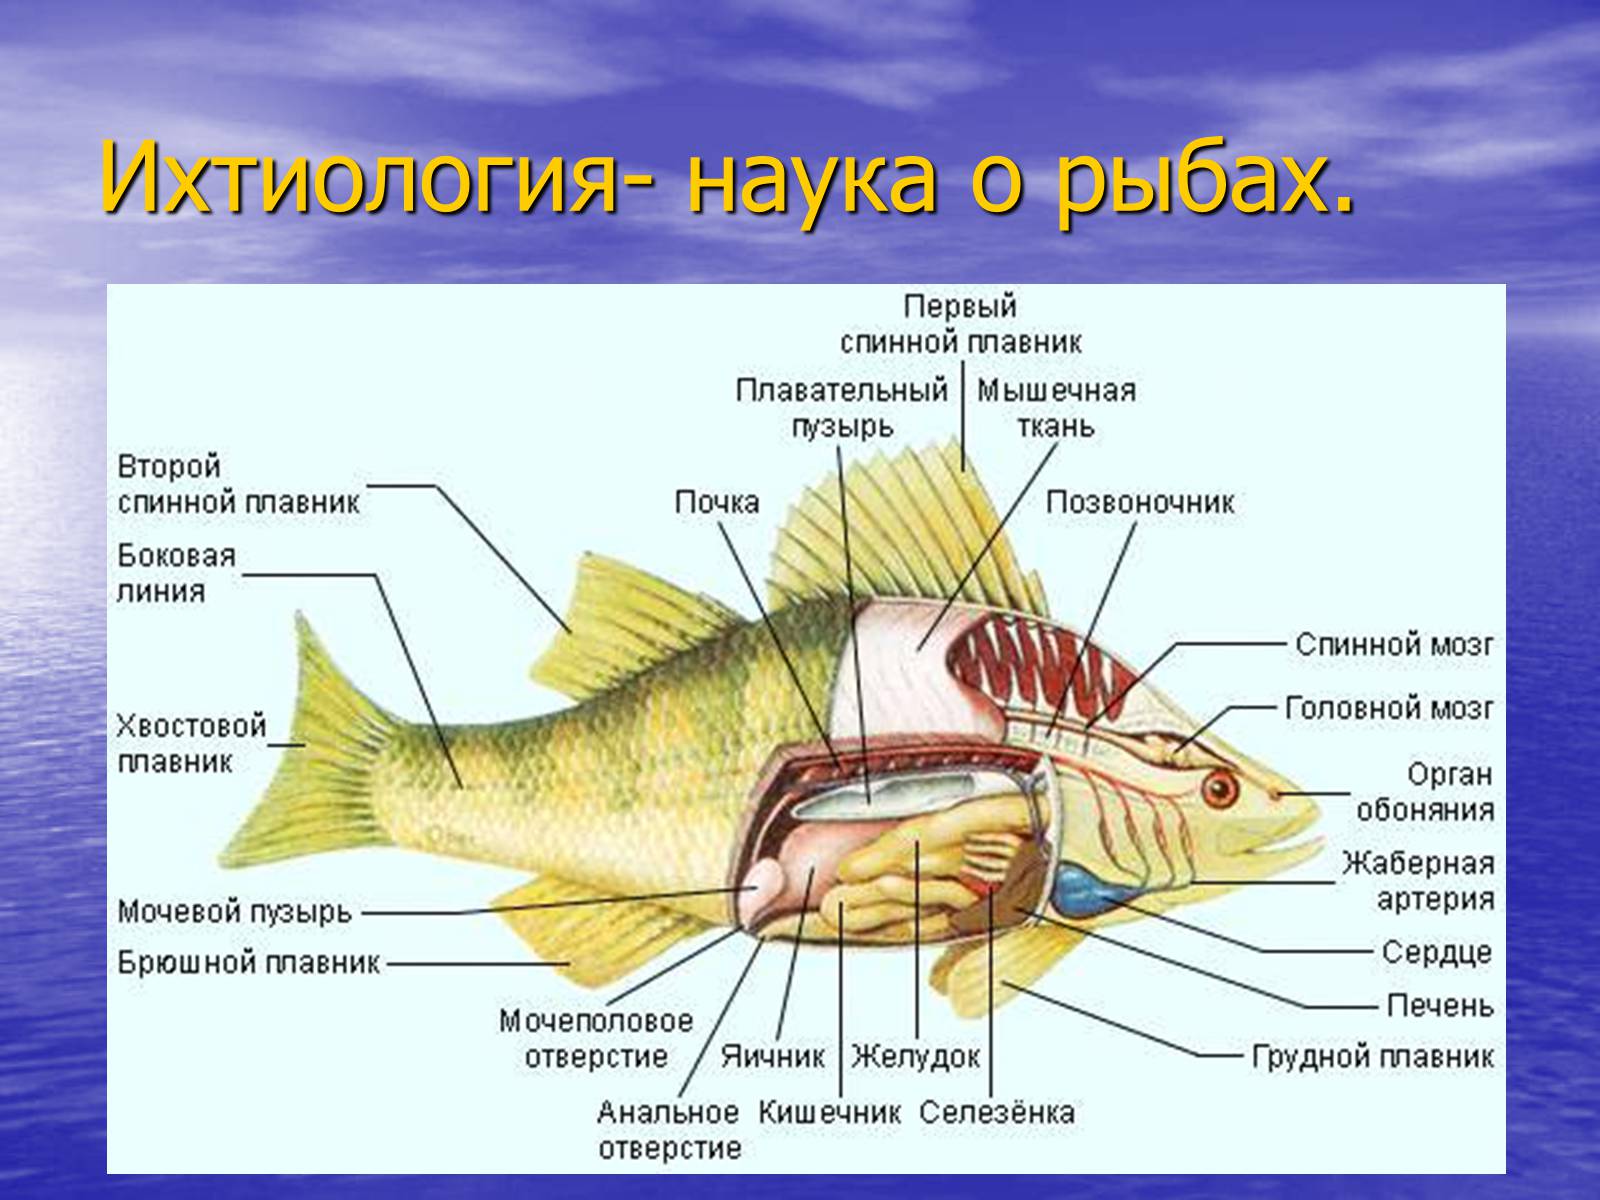 Презентація на тему «Класс хрящевые рыбы» - Слайд #4